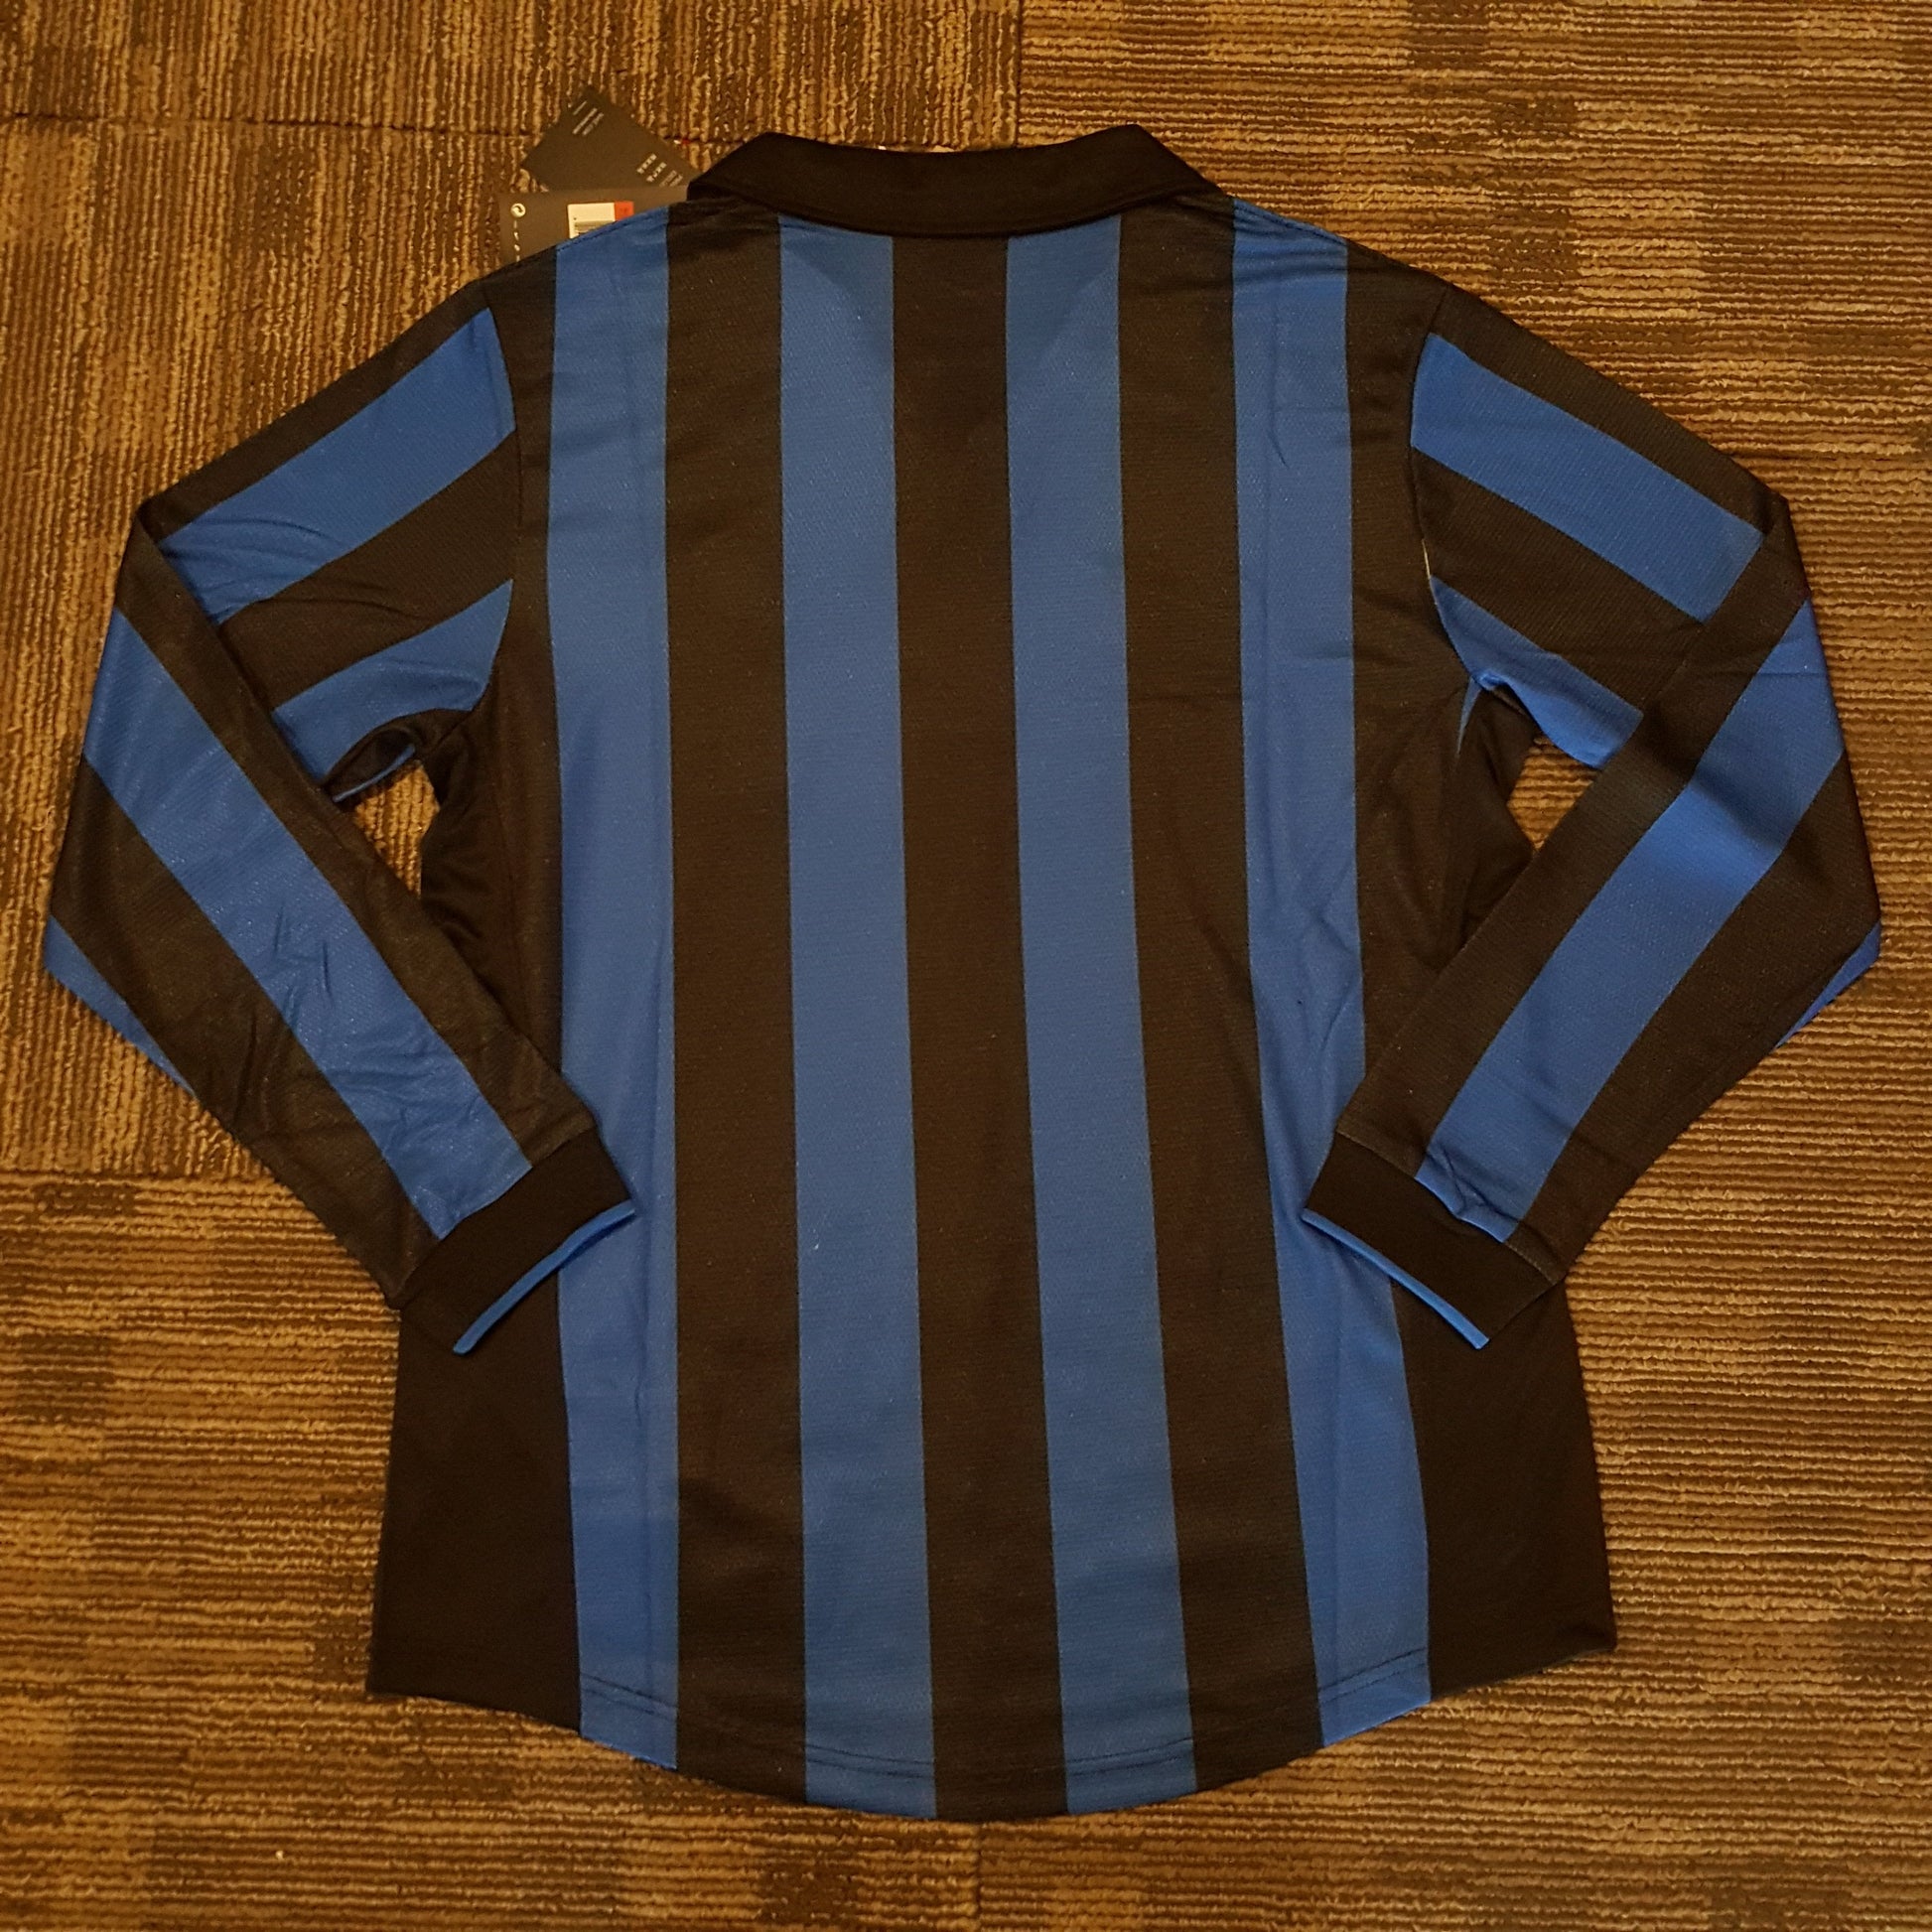 1998/99 Longsleeve Inter Milan Home Shirt - ClassicFootballJersey